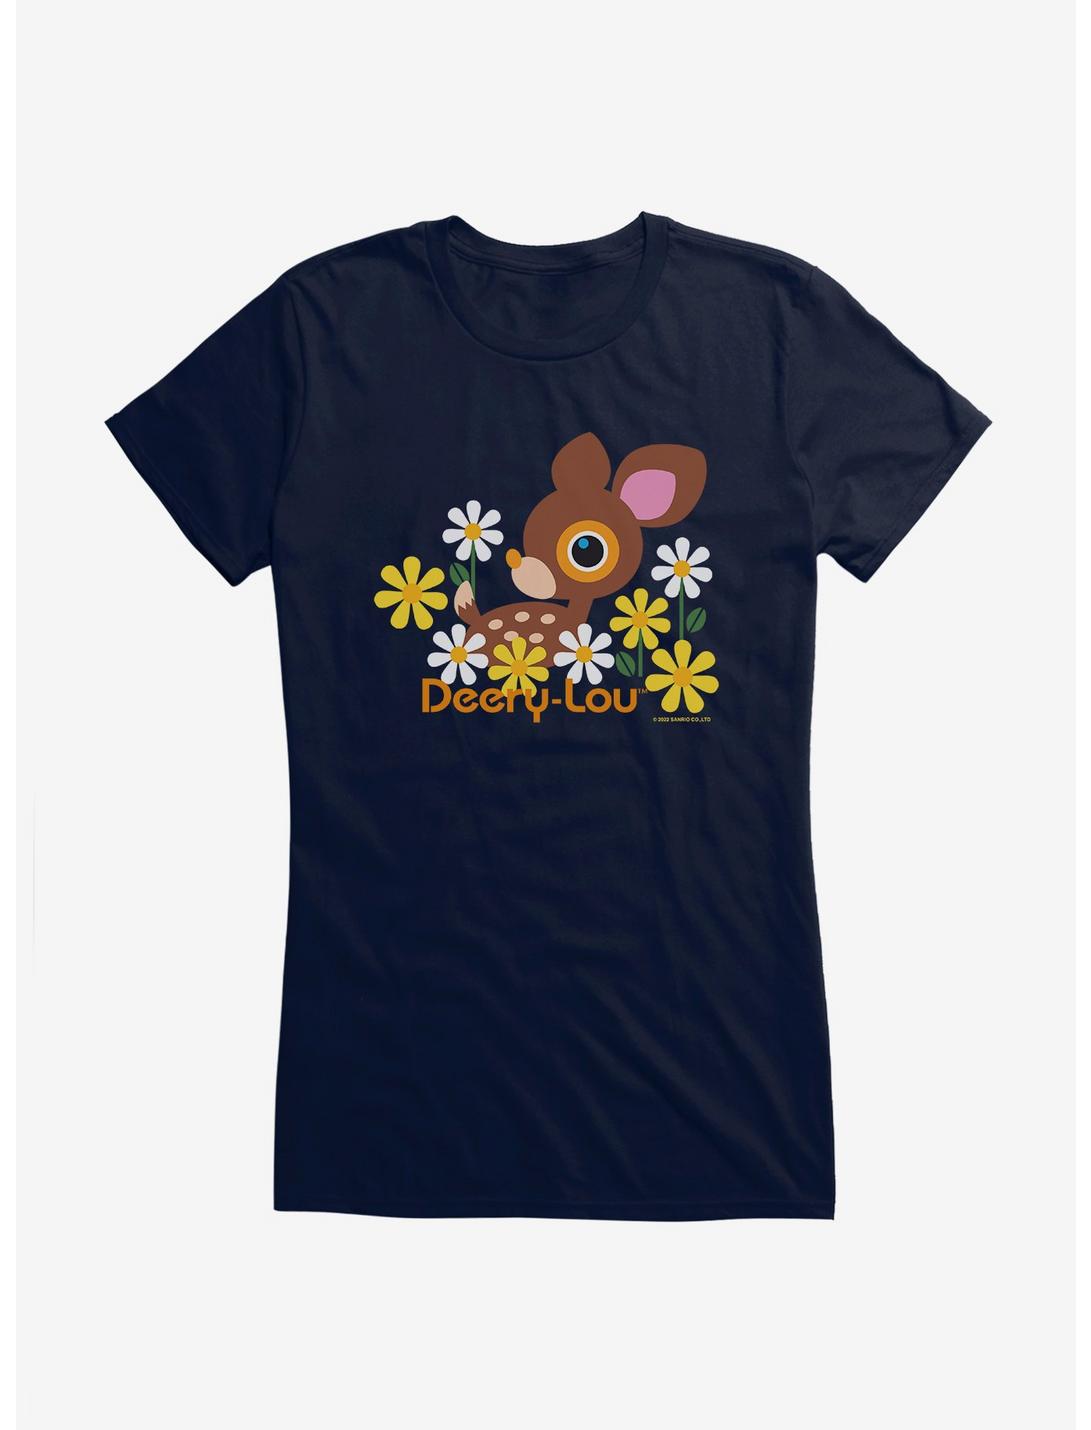 Deery-Lou Floral Forest Girls T-Shirt, NAVY, hi-res